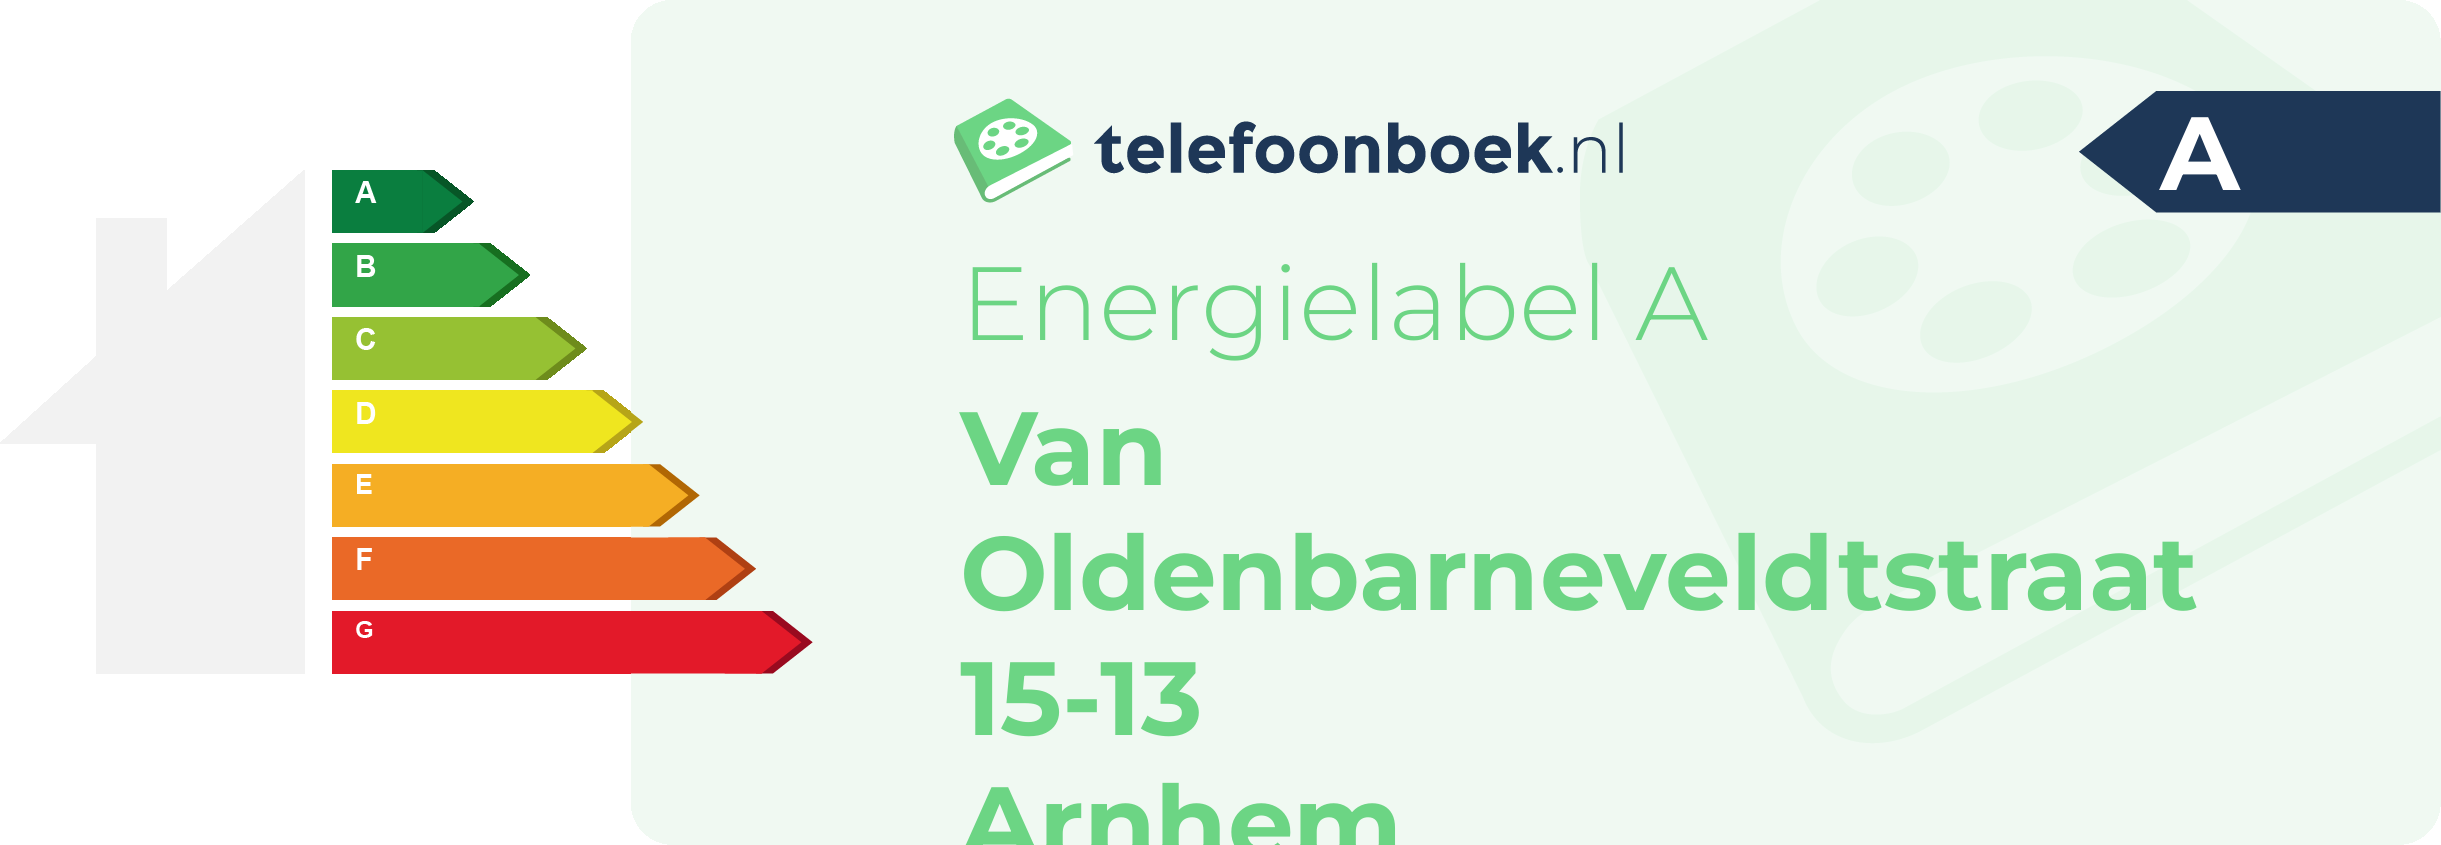 Energielabel Van Oldenbarneveldtstraat 15-13 Arnhem